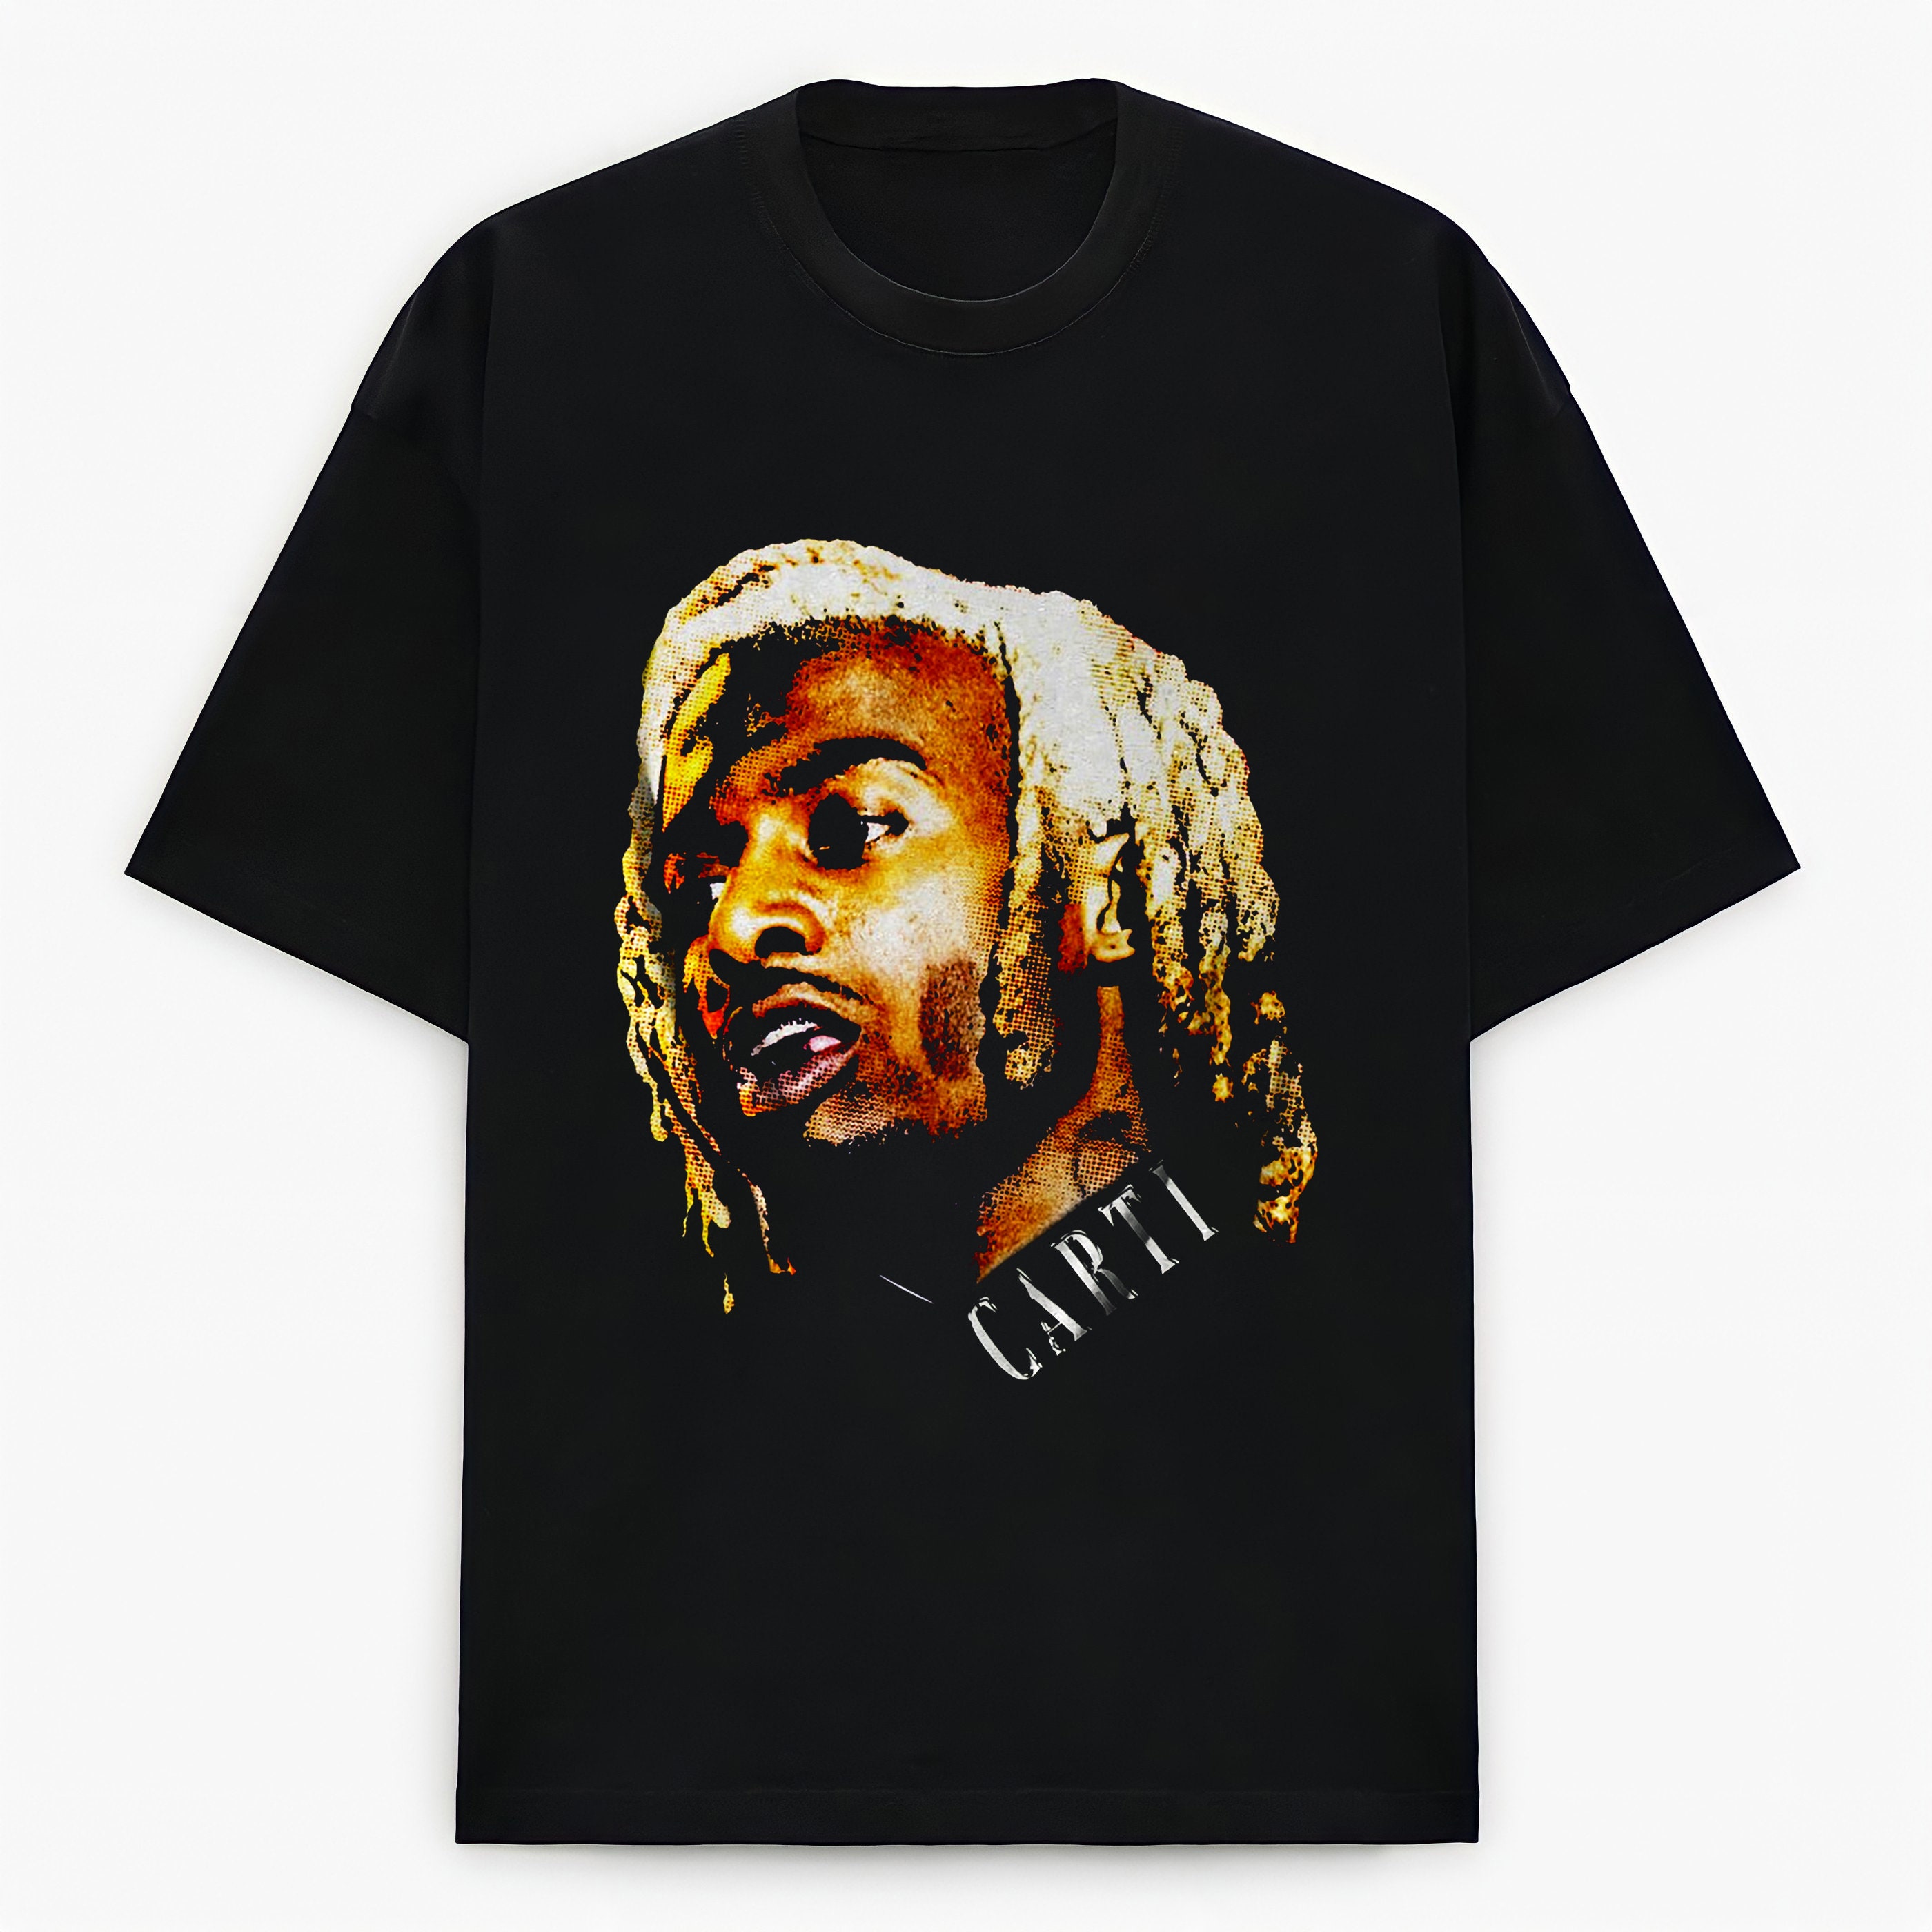 Playboi Carti Face Hip Hop Vintage Bootleg Retro 90s Streetwear Rapper Graphic Rap Tee T-shirt